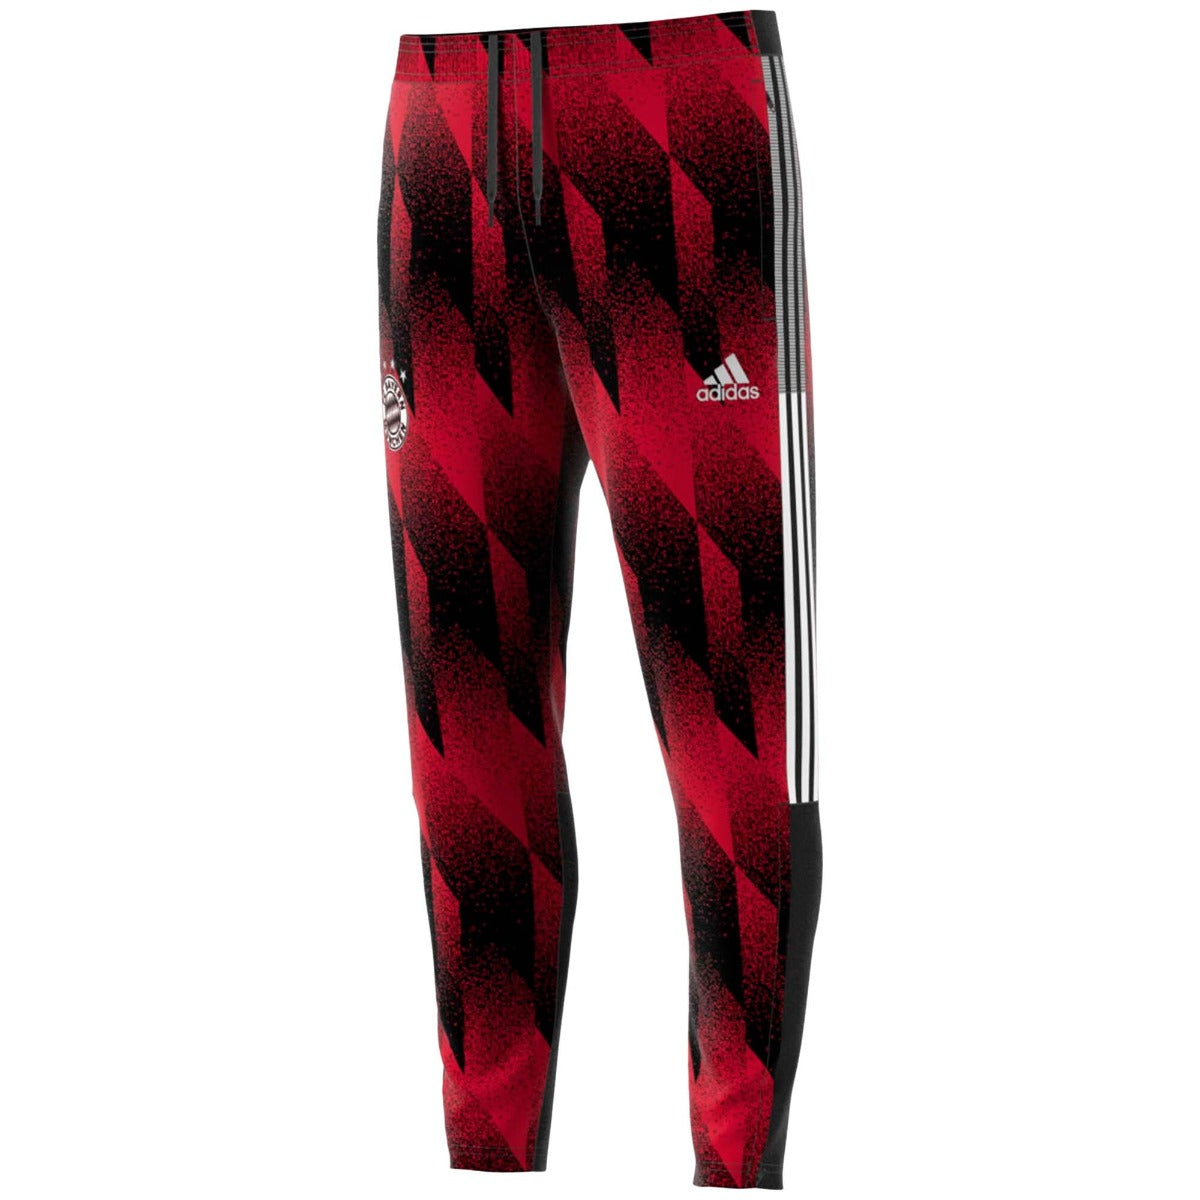 Adidas 2020-21 Bayern Munchen AOP Training Pants - Red-Black